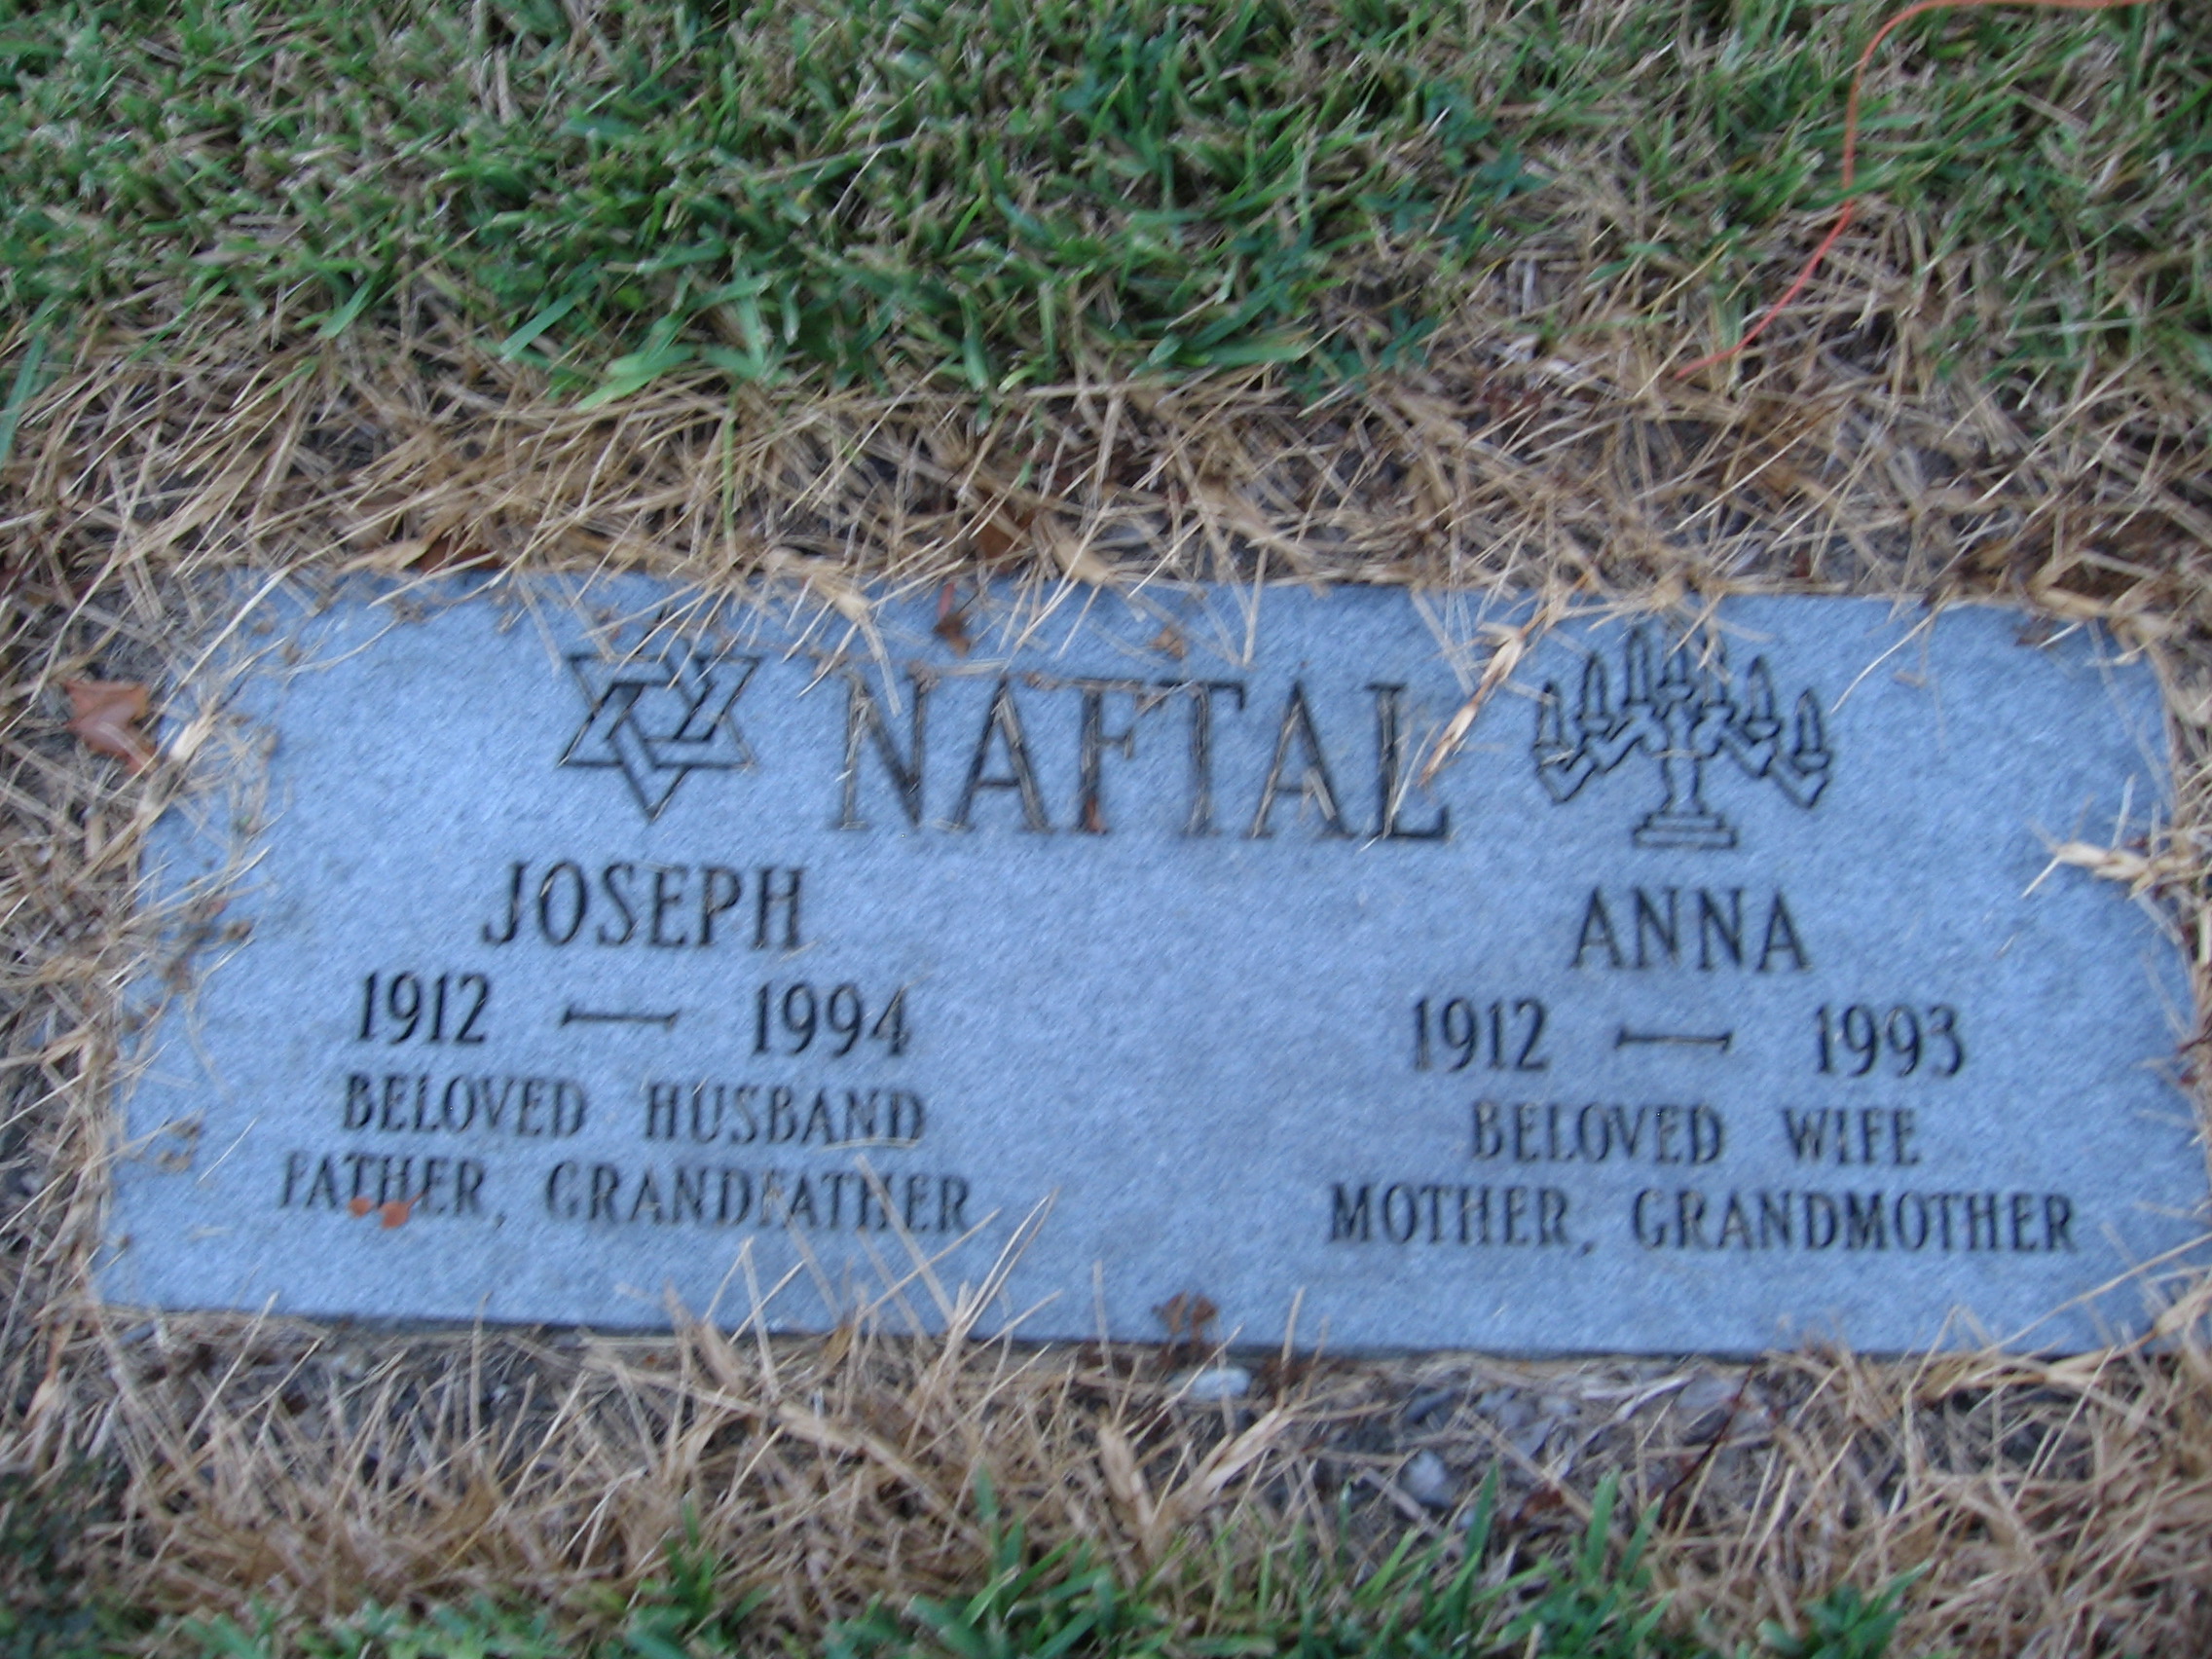 Joseph Naftal